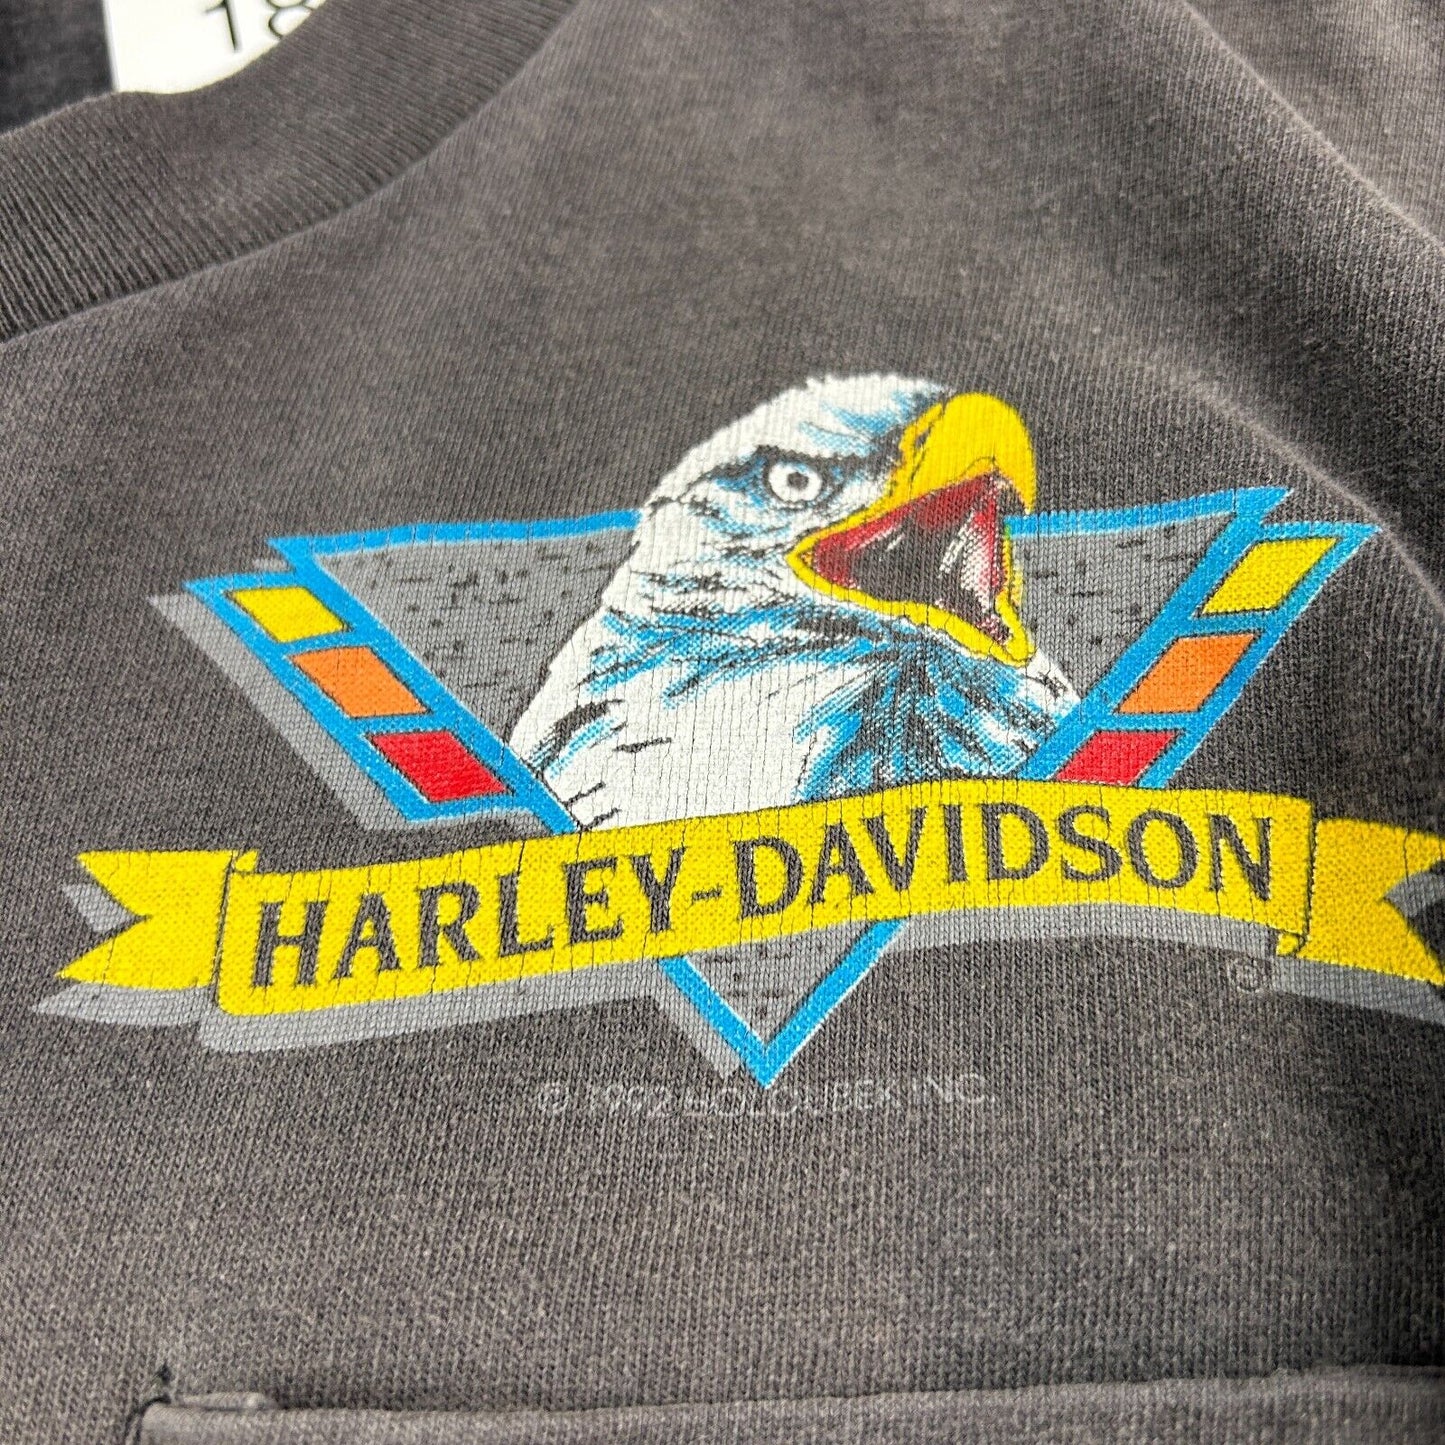 VINTAGE 1992 | Harley Davidson Motorcycles Sun Faded Biker T-Shirt sz M Adult